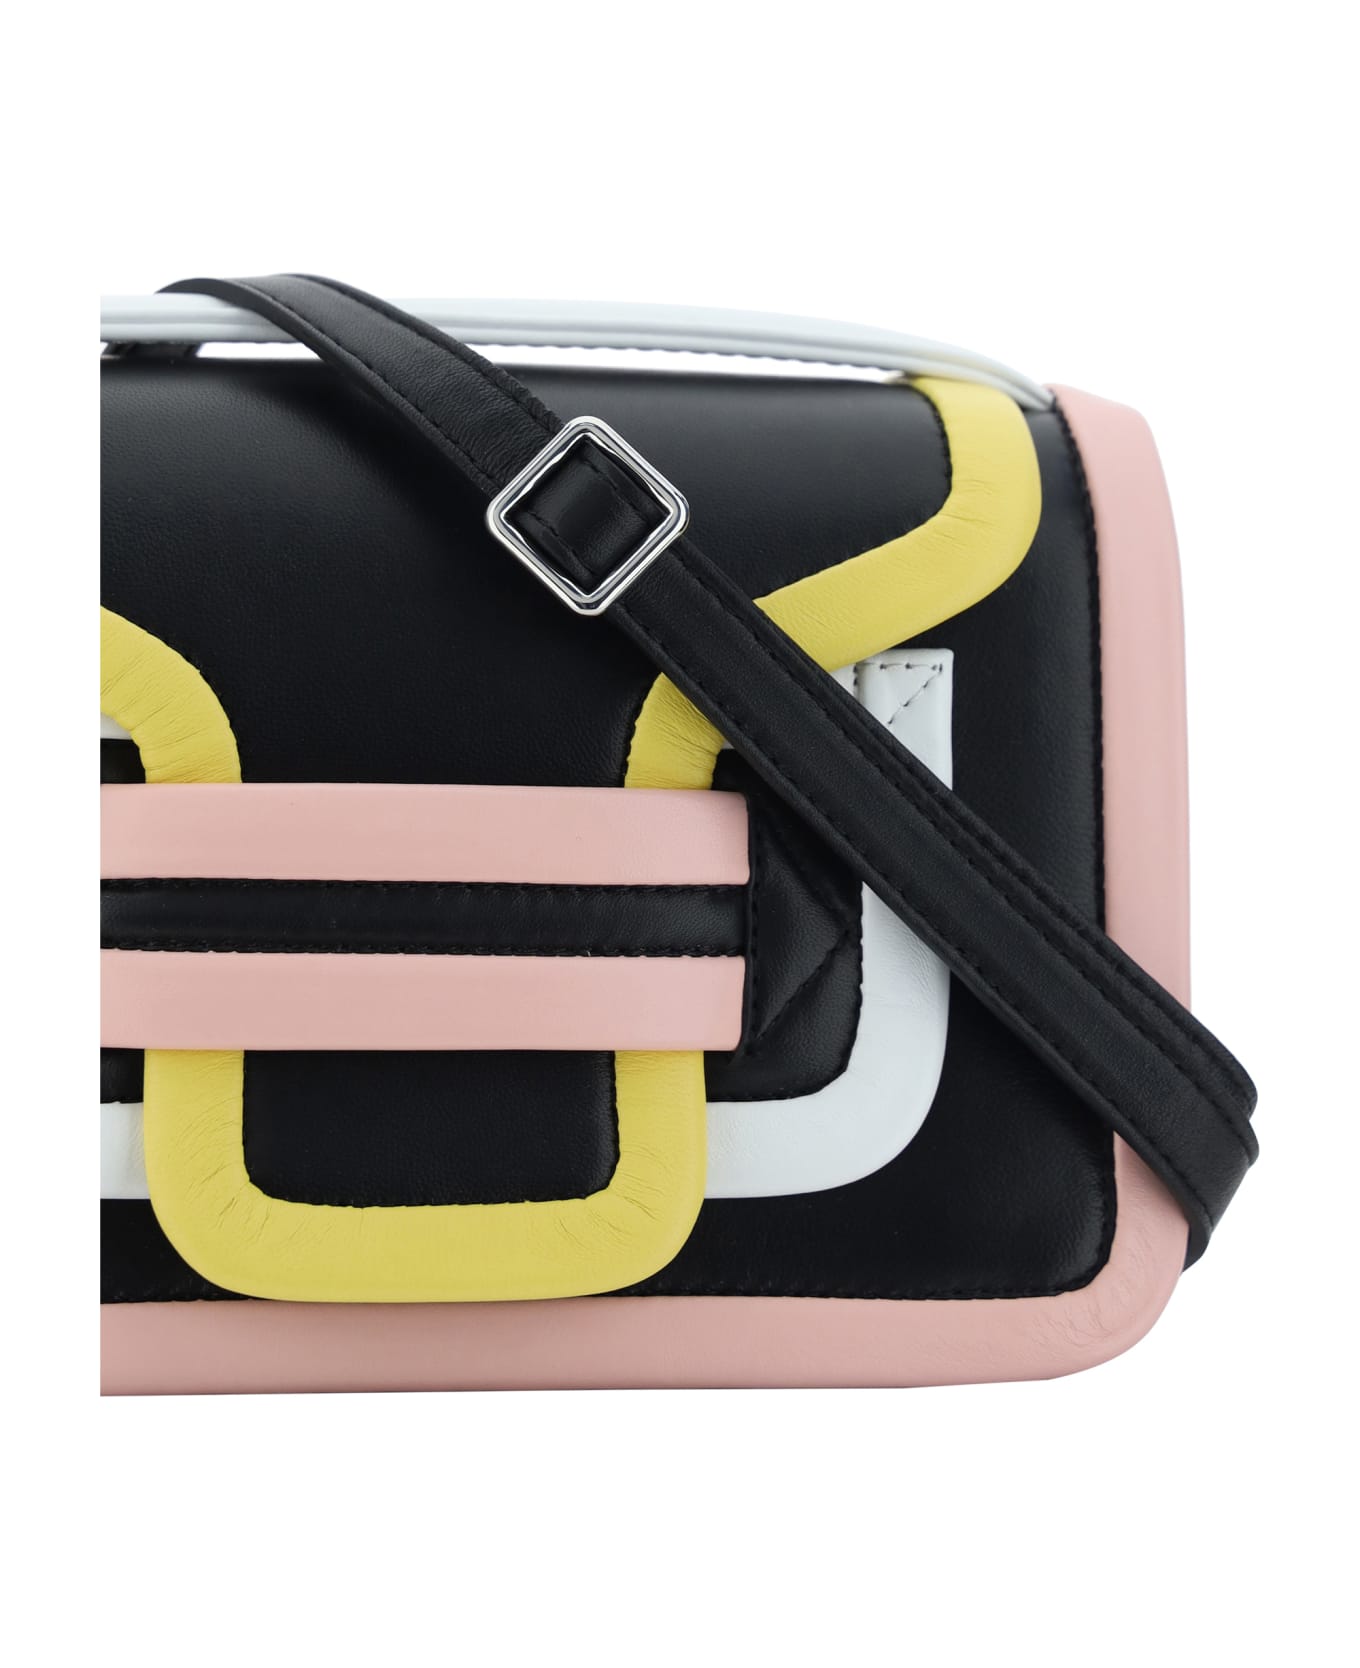 Pierre Hardy Alpha Handbag - Black/pink/yellow バッグ